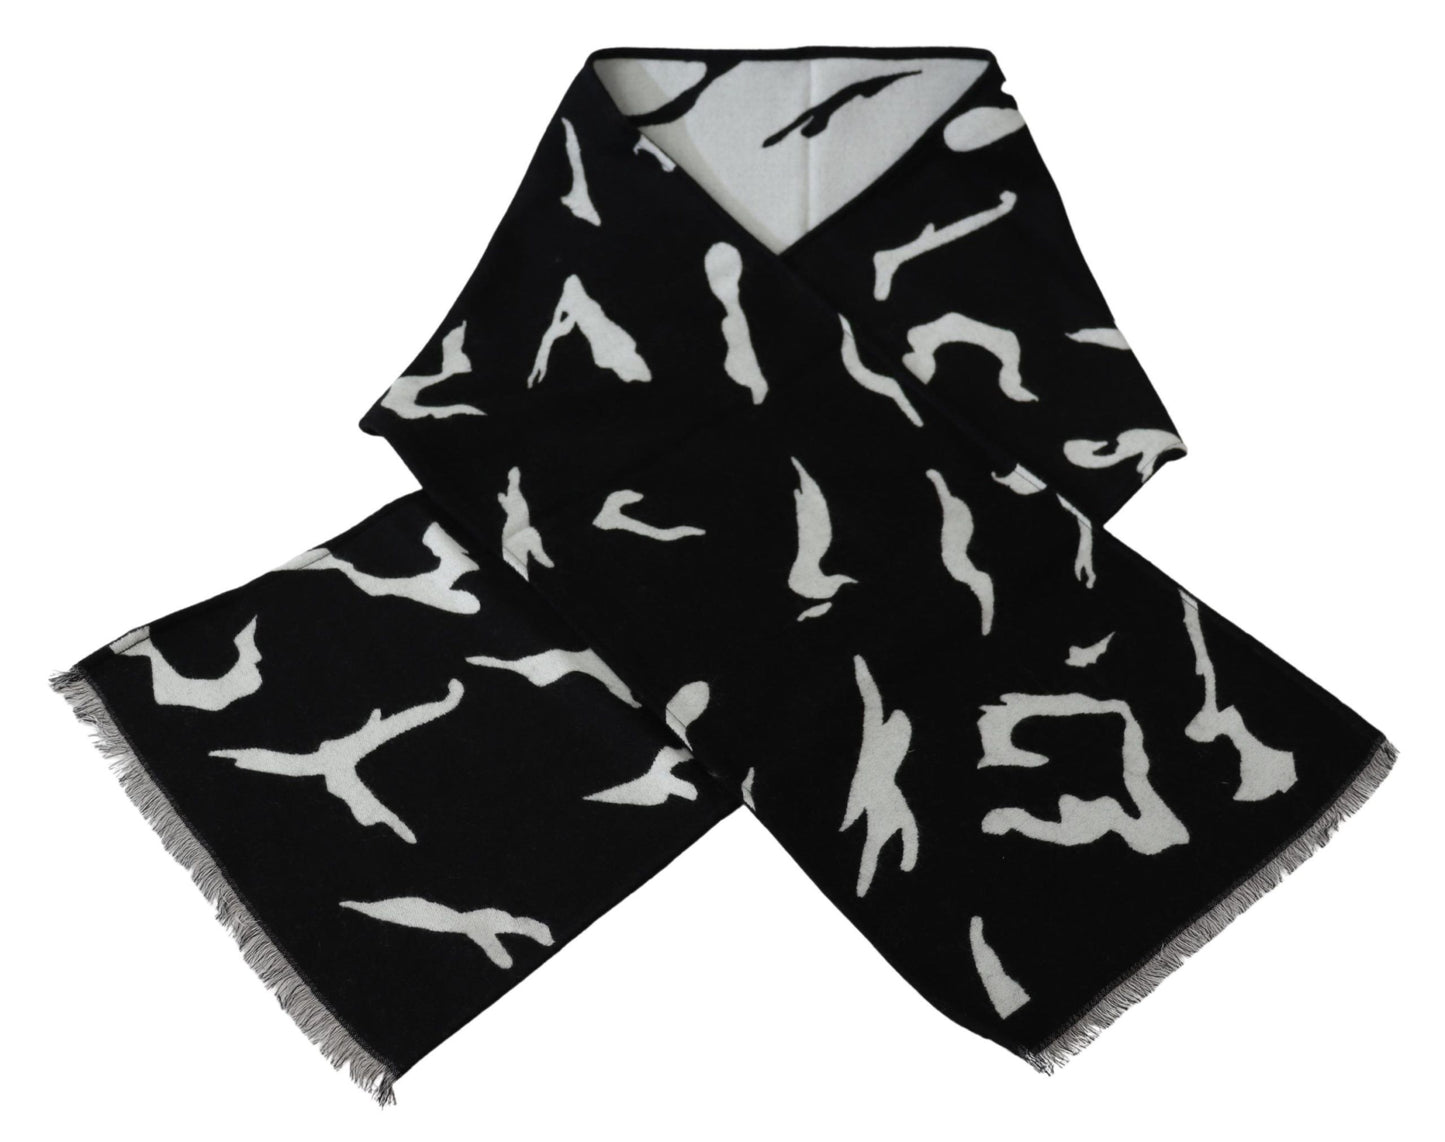 Givenchy Black White Woll Unisex Winter warmer Schal Wickelschal